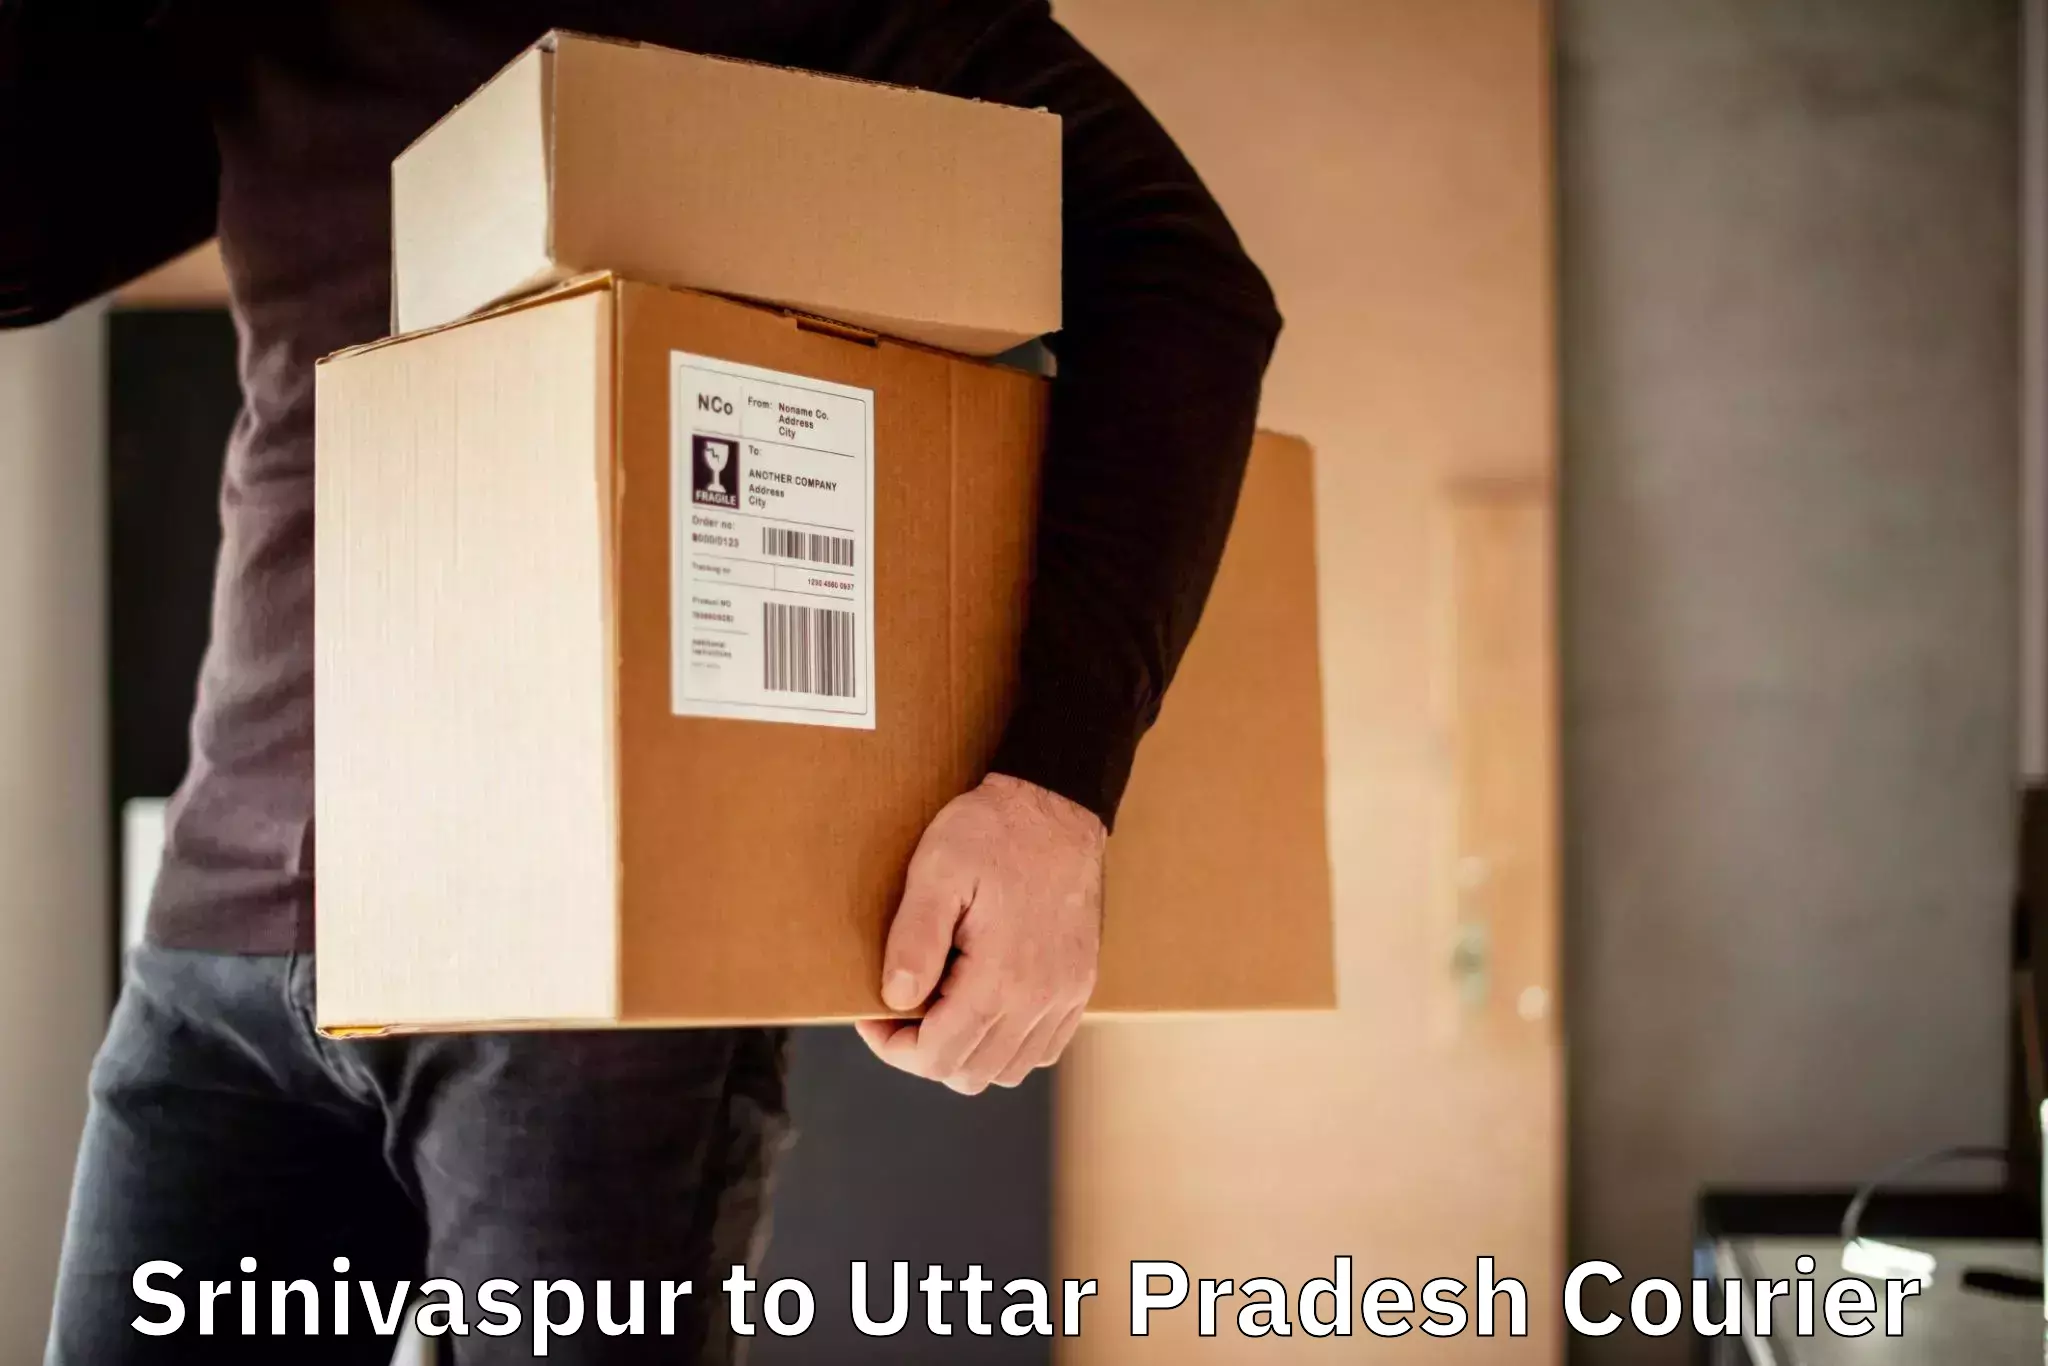 Courier service partnerships Srinivaspur to Aligarh